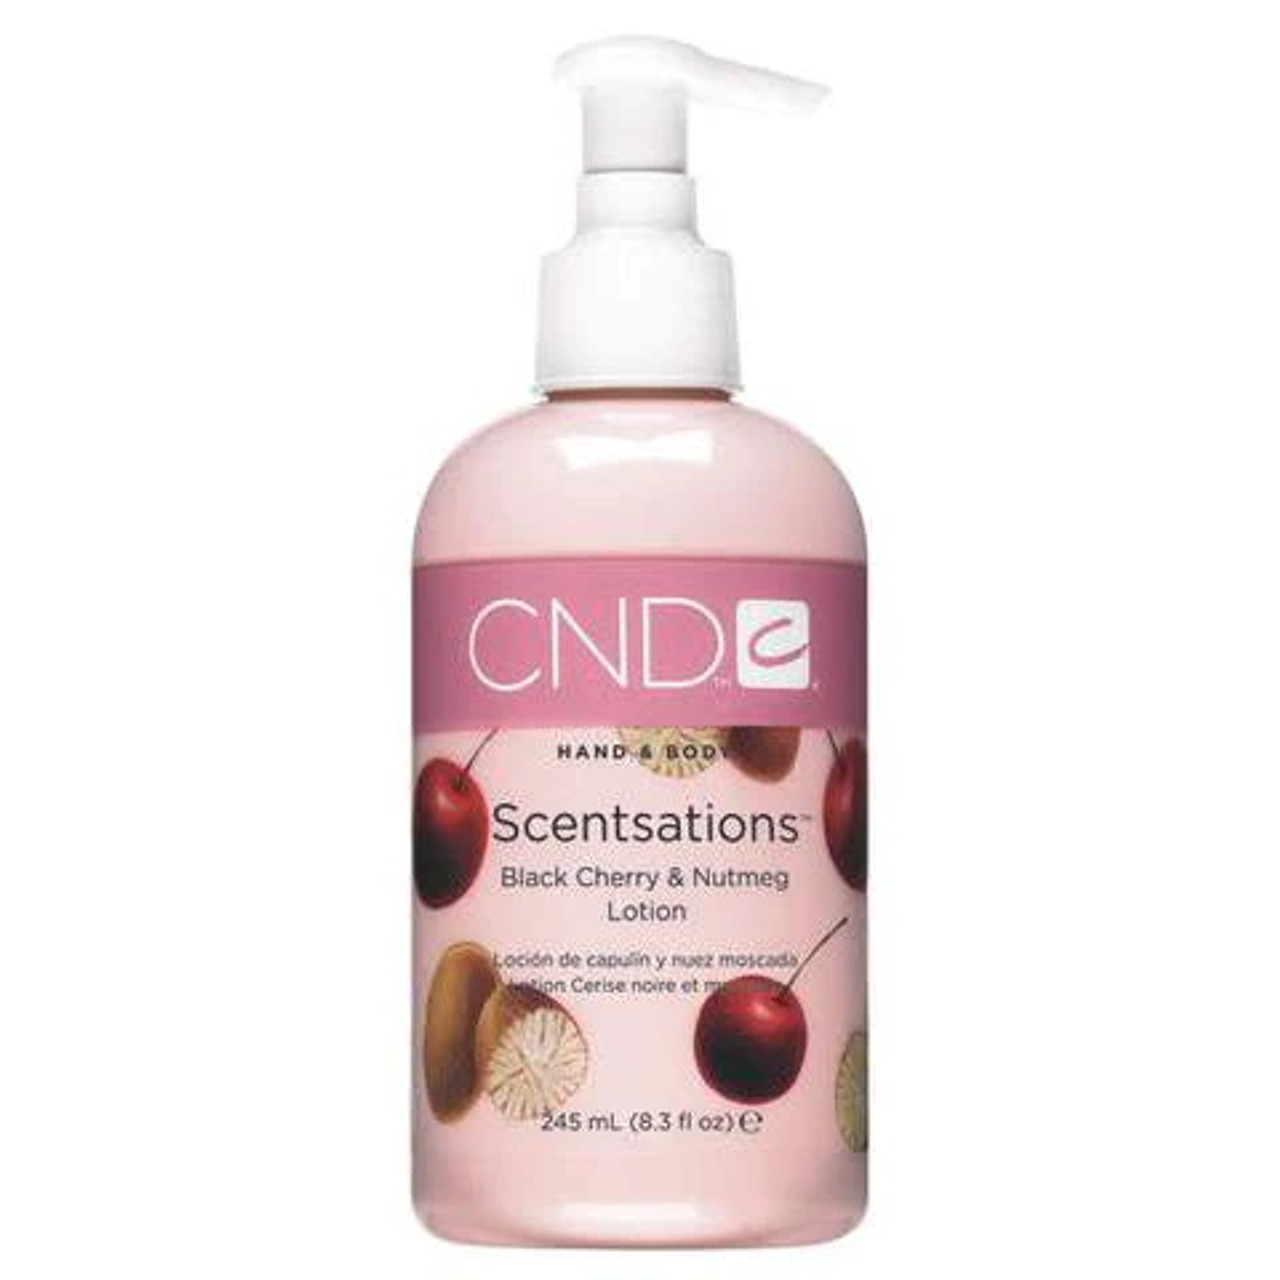 CND Scentsation Black Cherry & Nutmeg Lotion - 245 mL (8.3 fl. oz.)  - Old Packaging